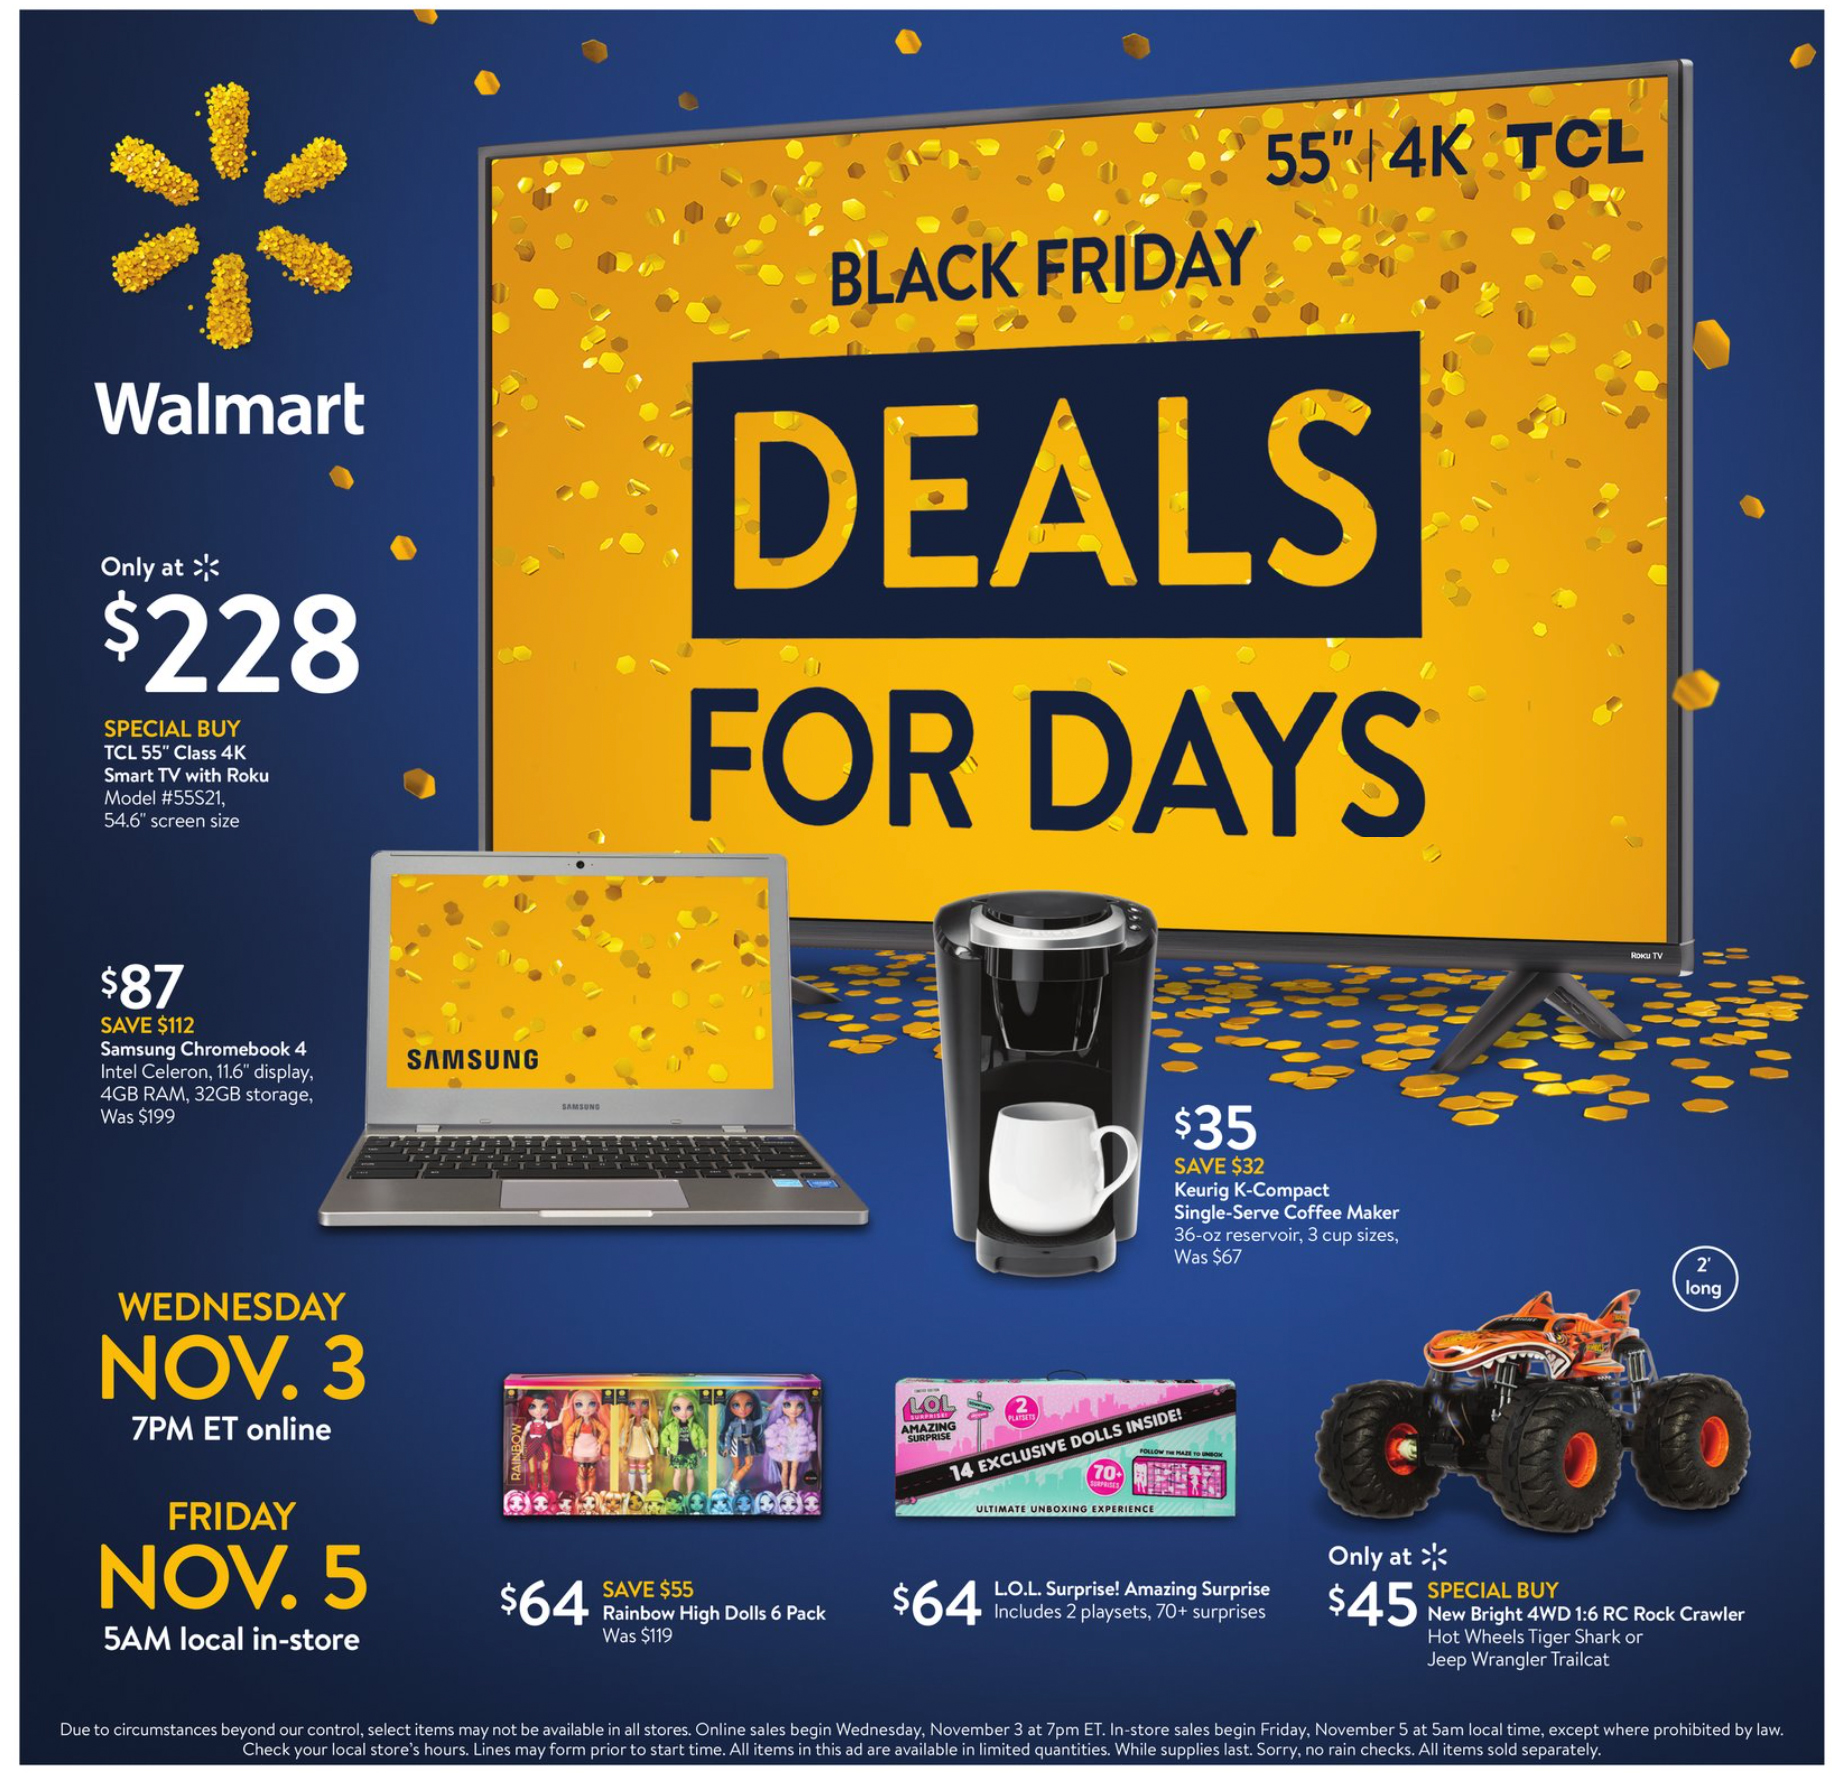 Walmart Black Friday Ad Deal Days 2021 1634563901 1634563901 